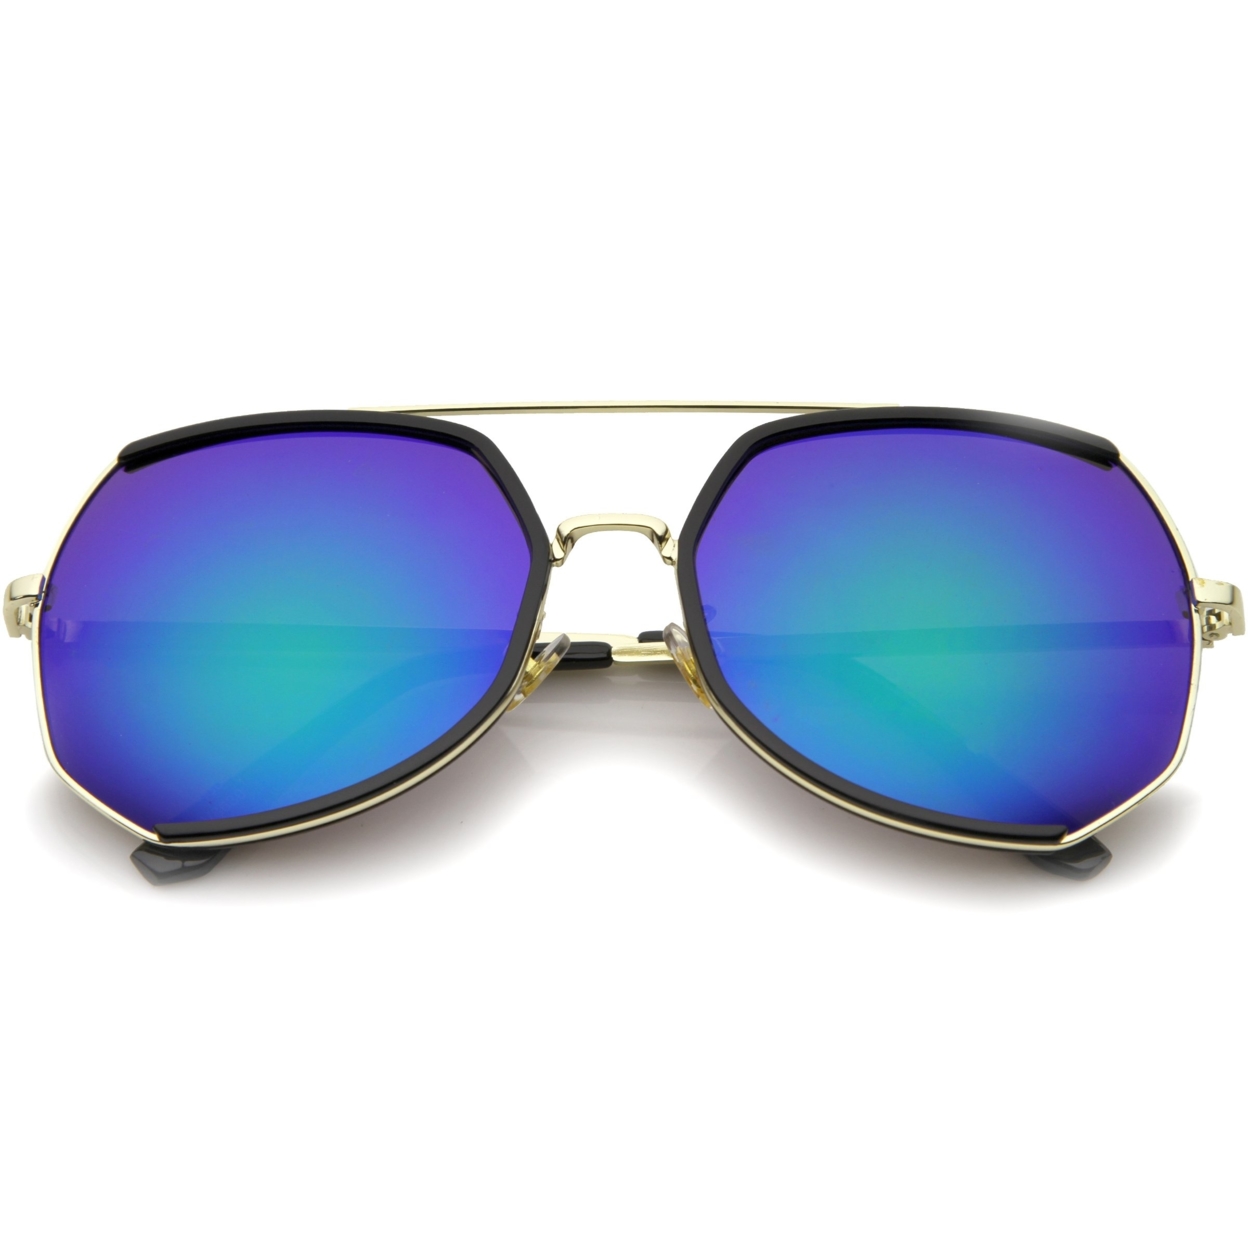 Womens Fashion Gold Metal Crossbar Mirror Lens Oversized Sunglasses 64mm - Black-Gold / Blue Mirror